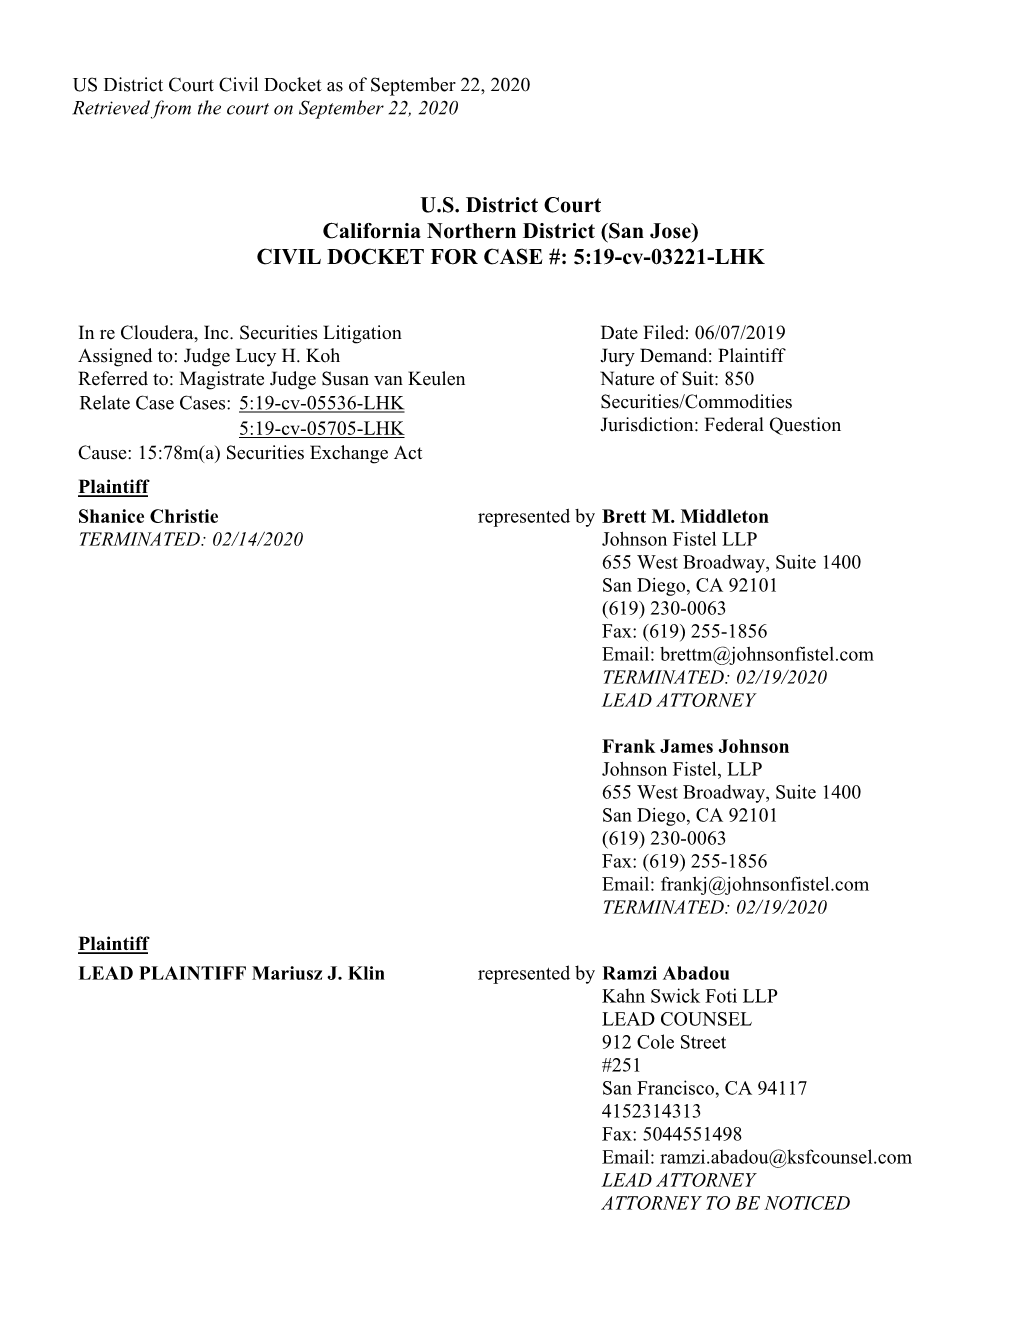 In Re Cloudera, Inc. Securities Litigation 19-CV-03221-U.S. District Court Civil Docket